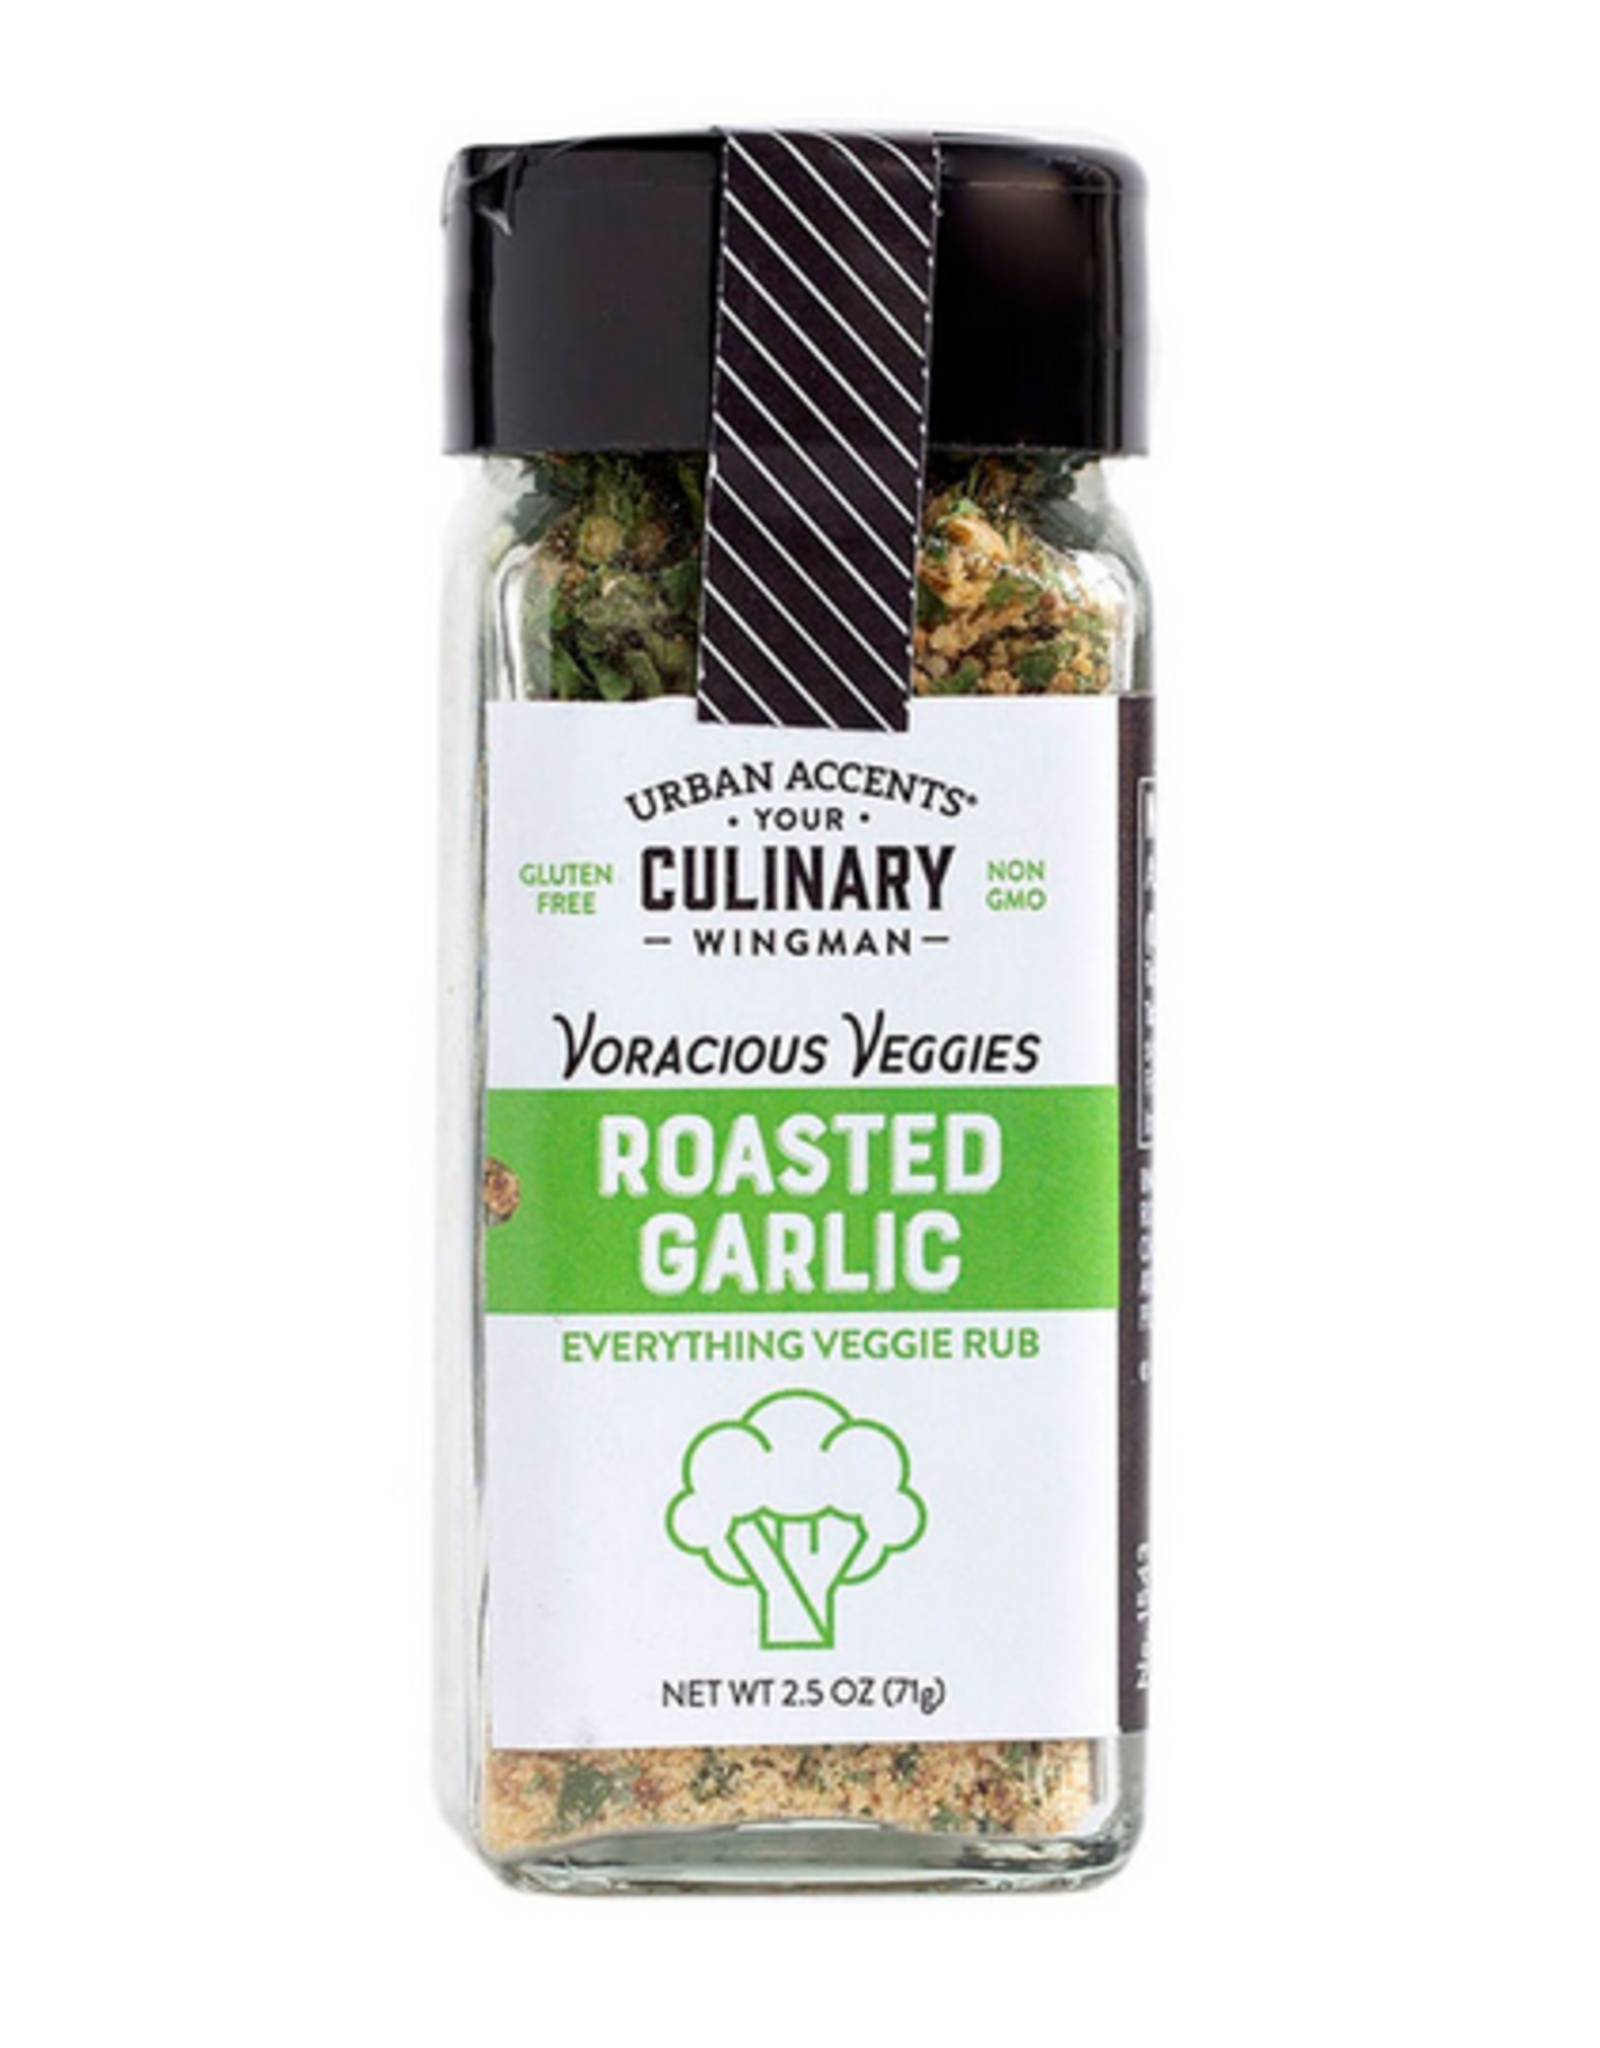 Urban Accents Culinary Wingman Roasted Garlic Veggie Rub